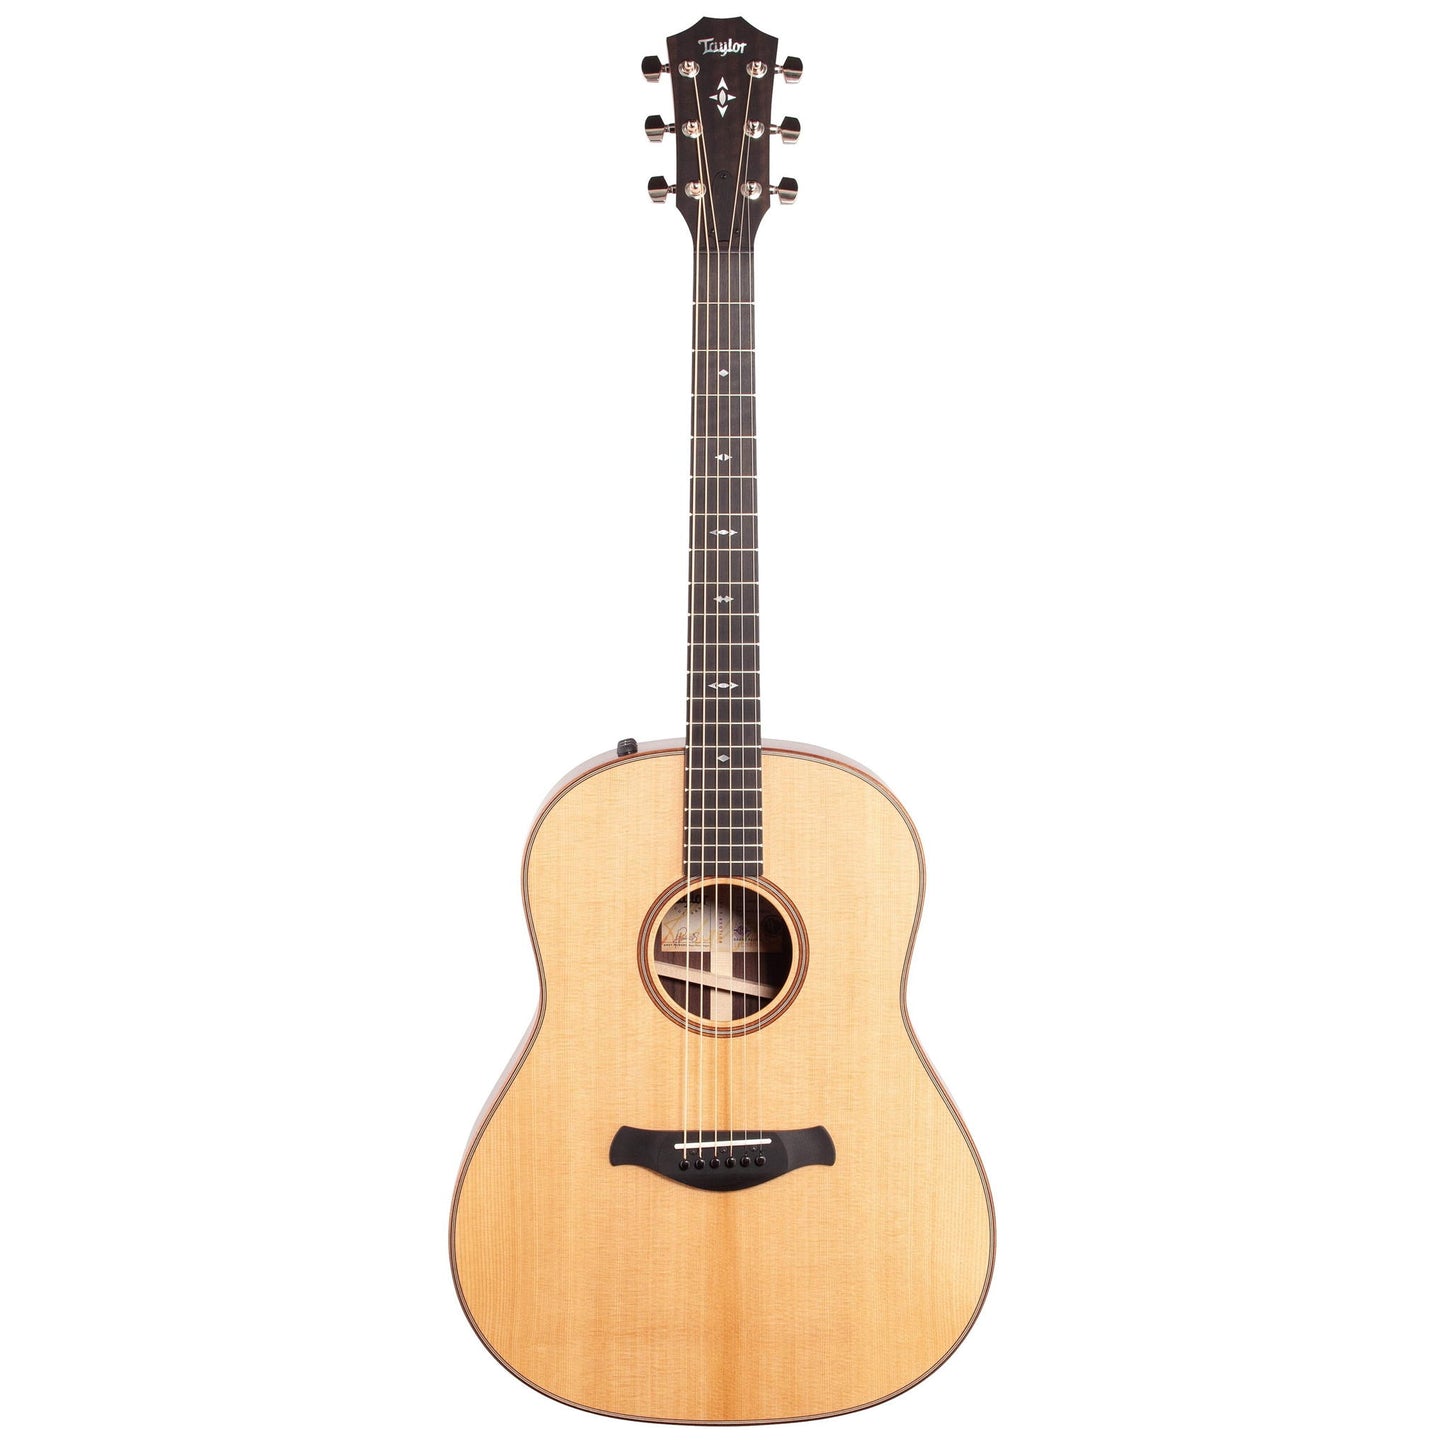 Taylor 717e Builder's Edition Acoustic-Electric Guitar, Natural